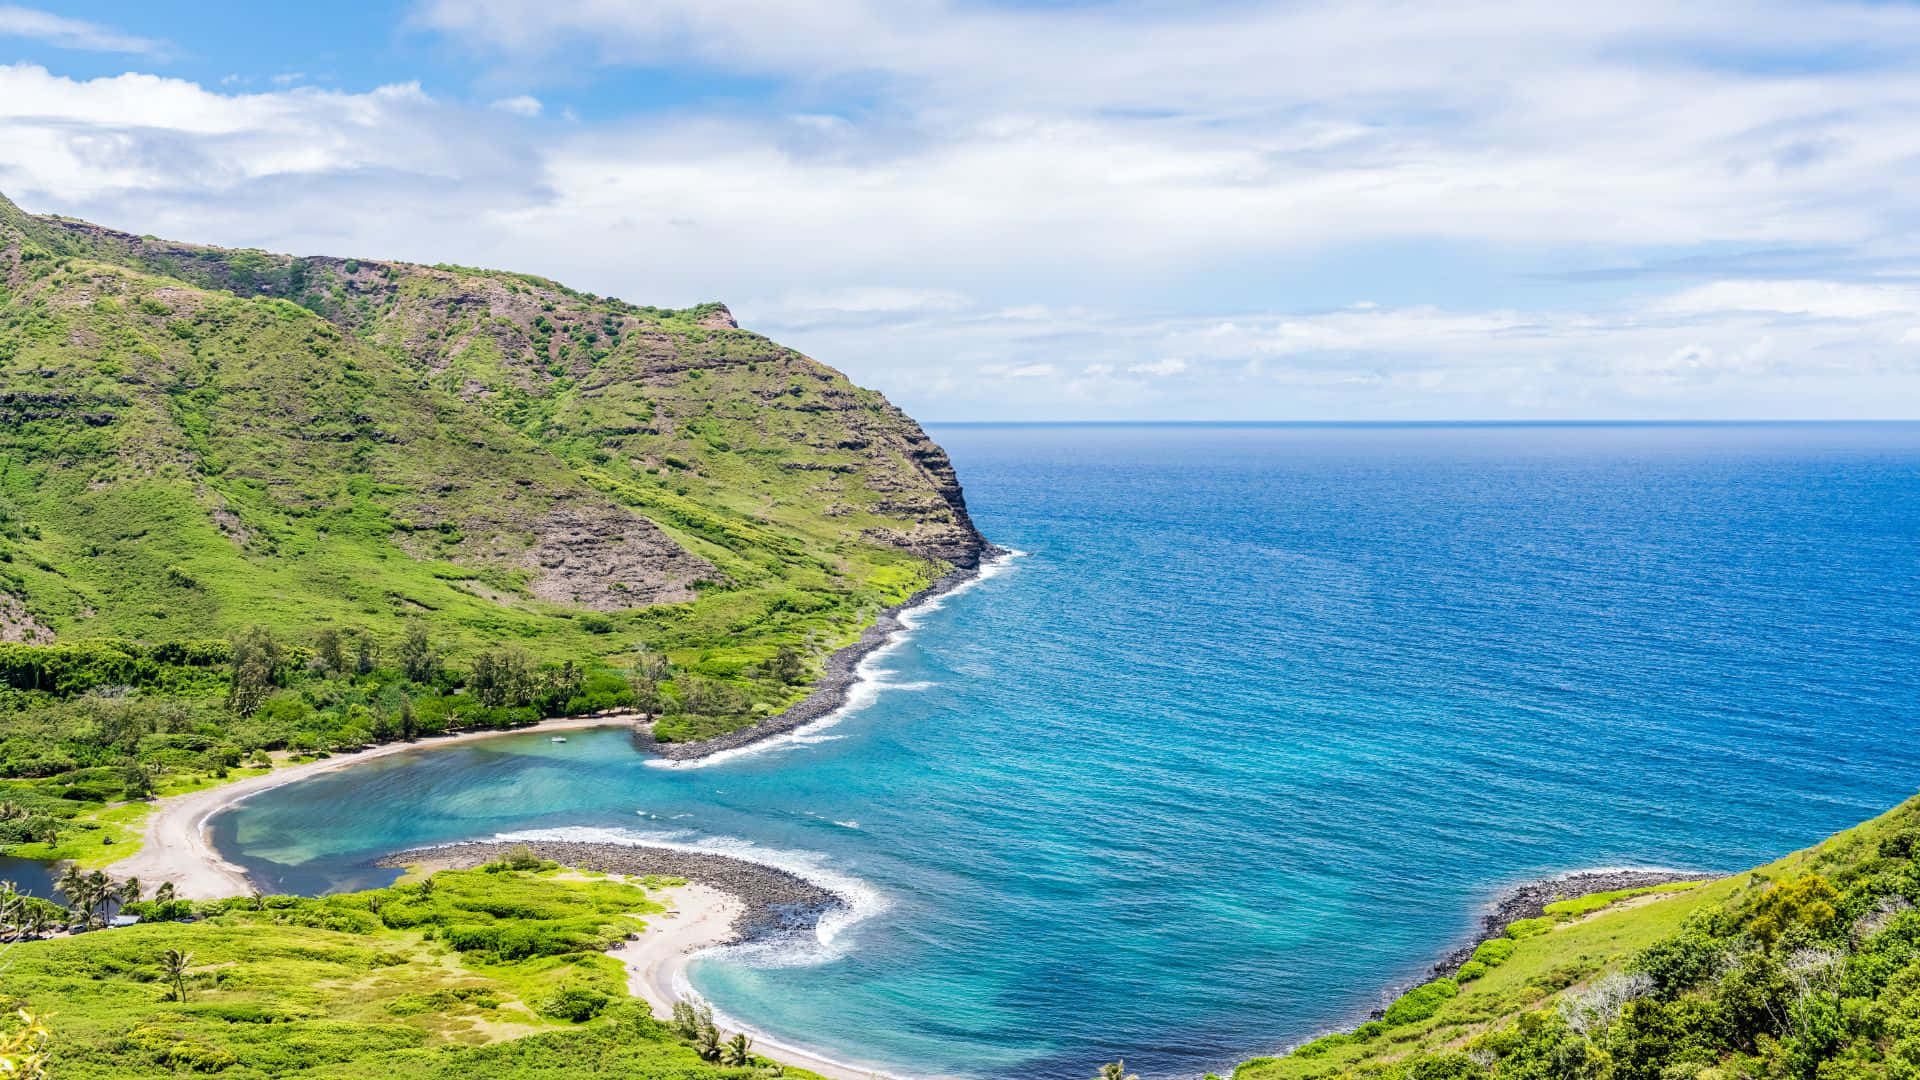 Enjoy the breath-taking beauty of Hawaii!